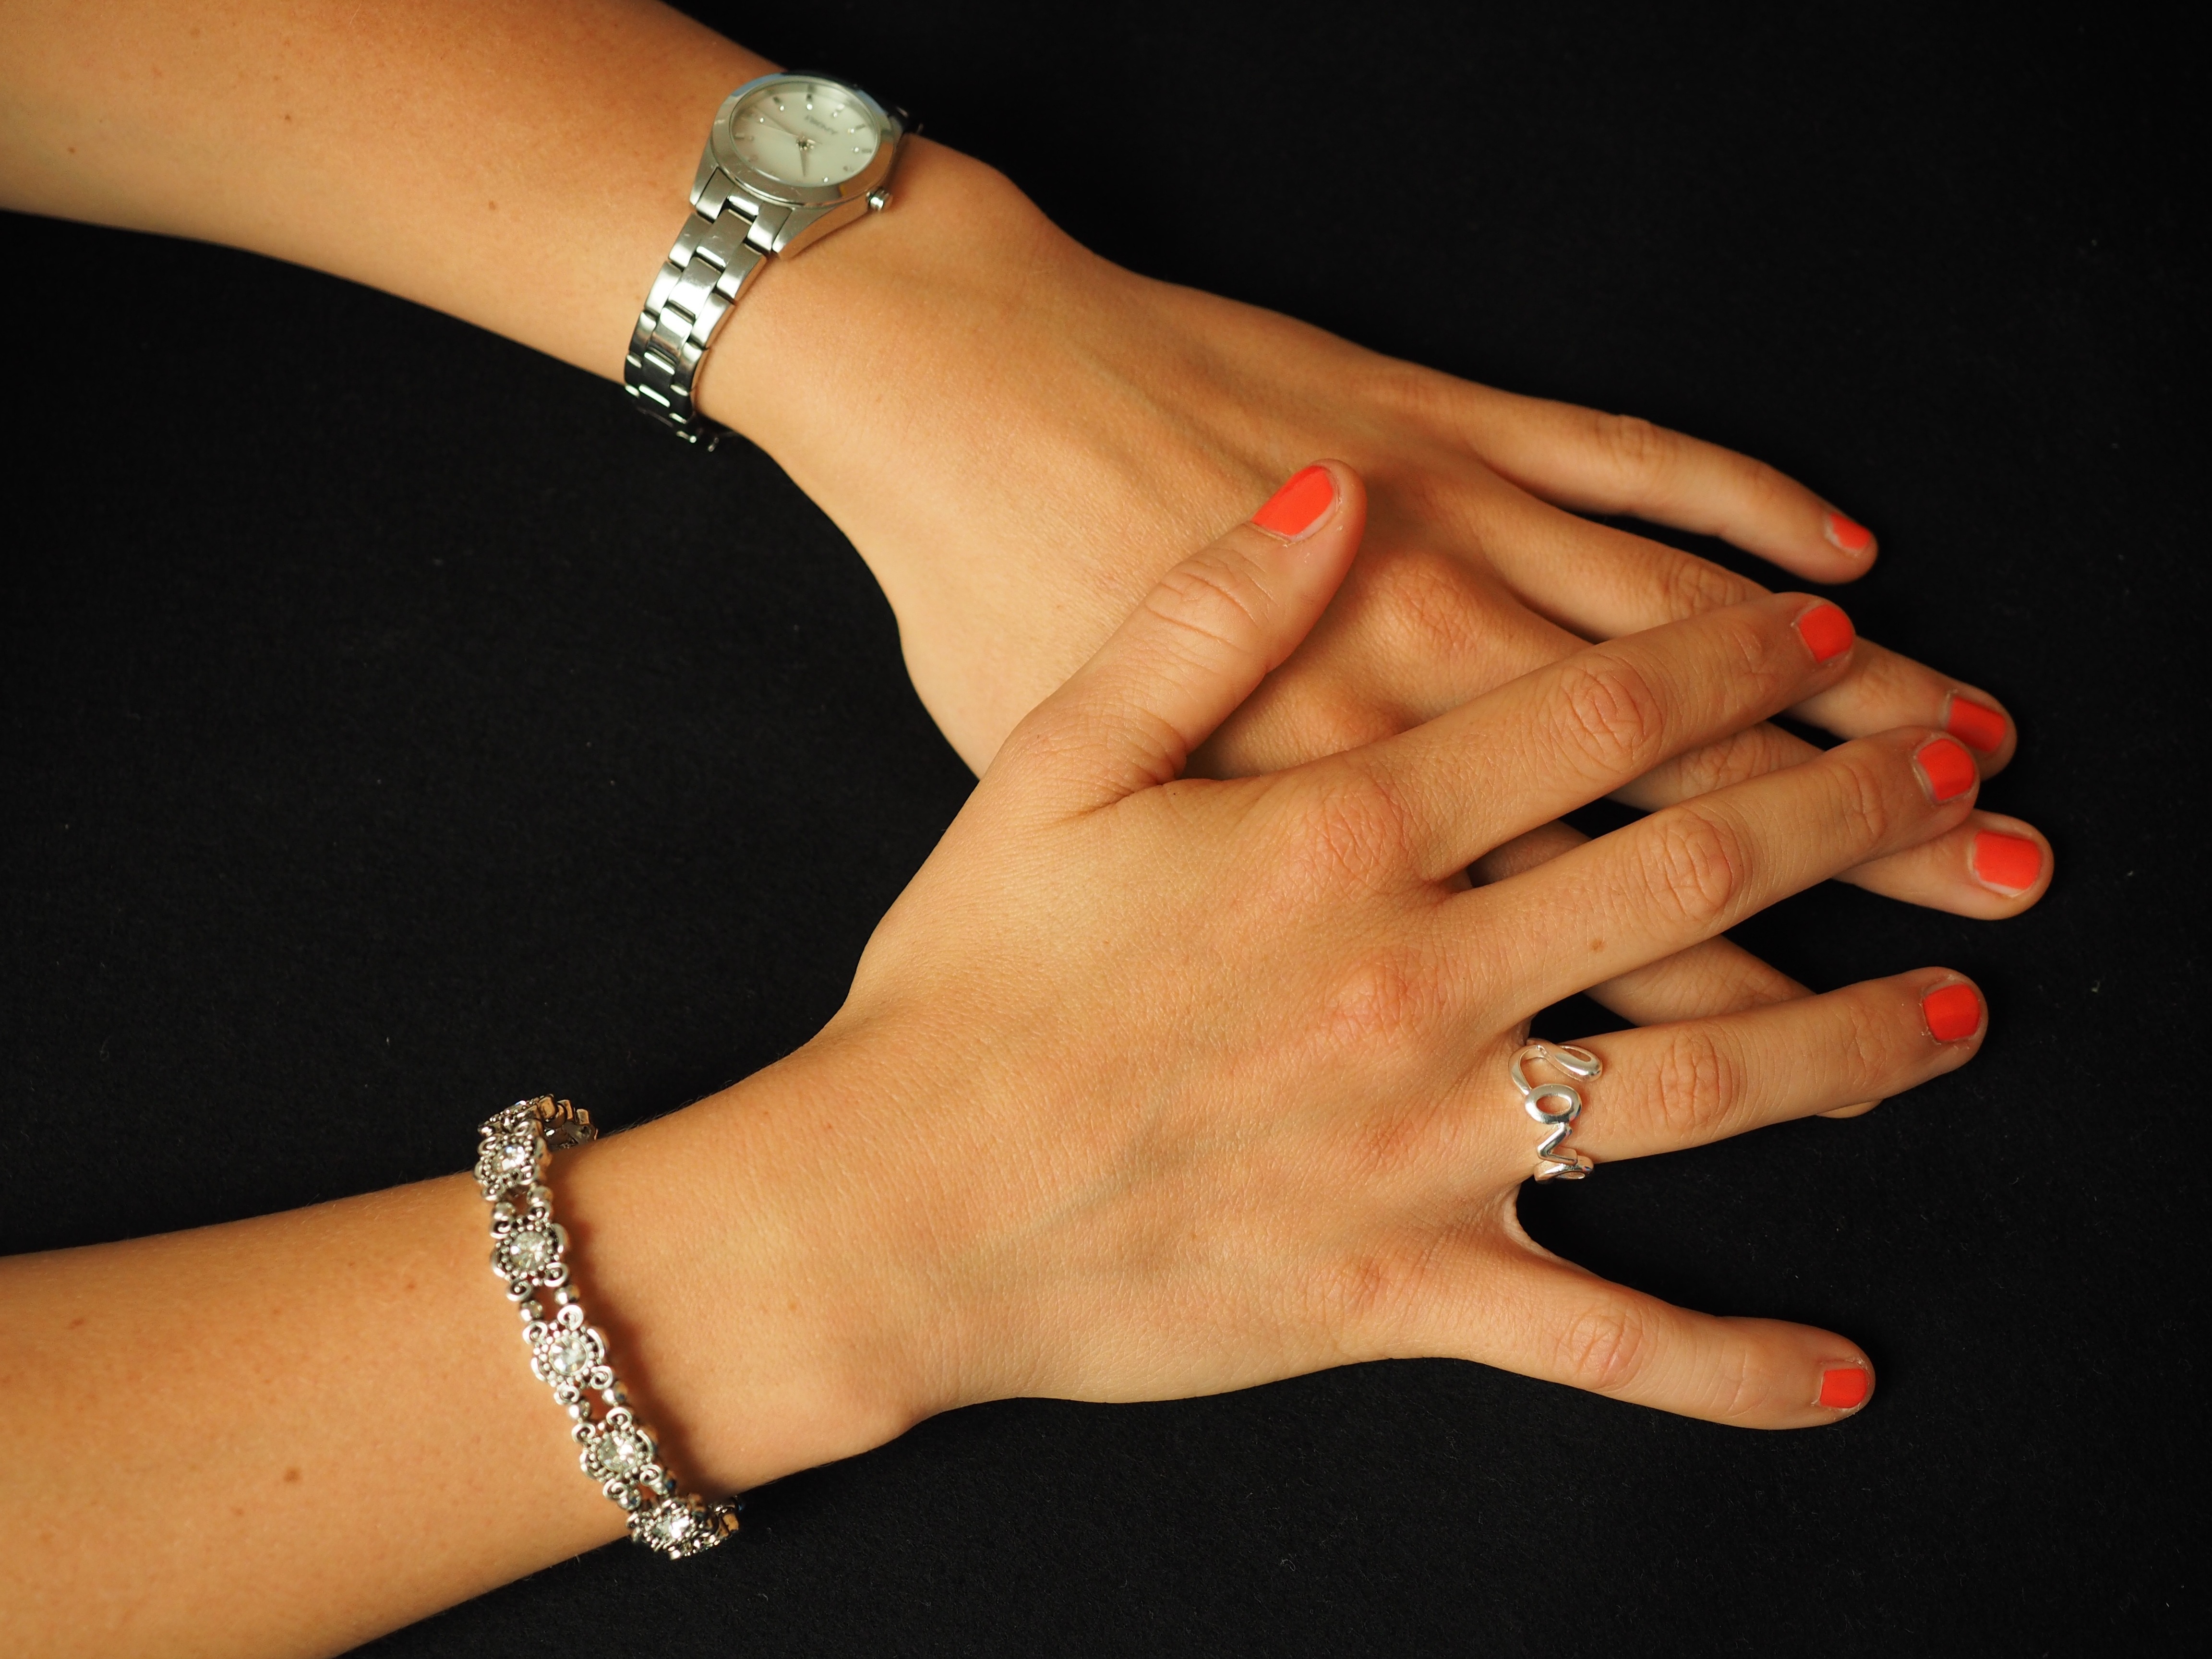 silver love ring link strap round analog watch and diamond embellish silver bracelet